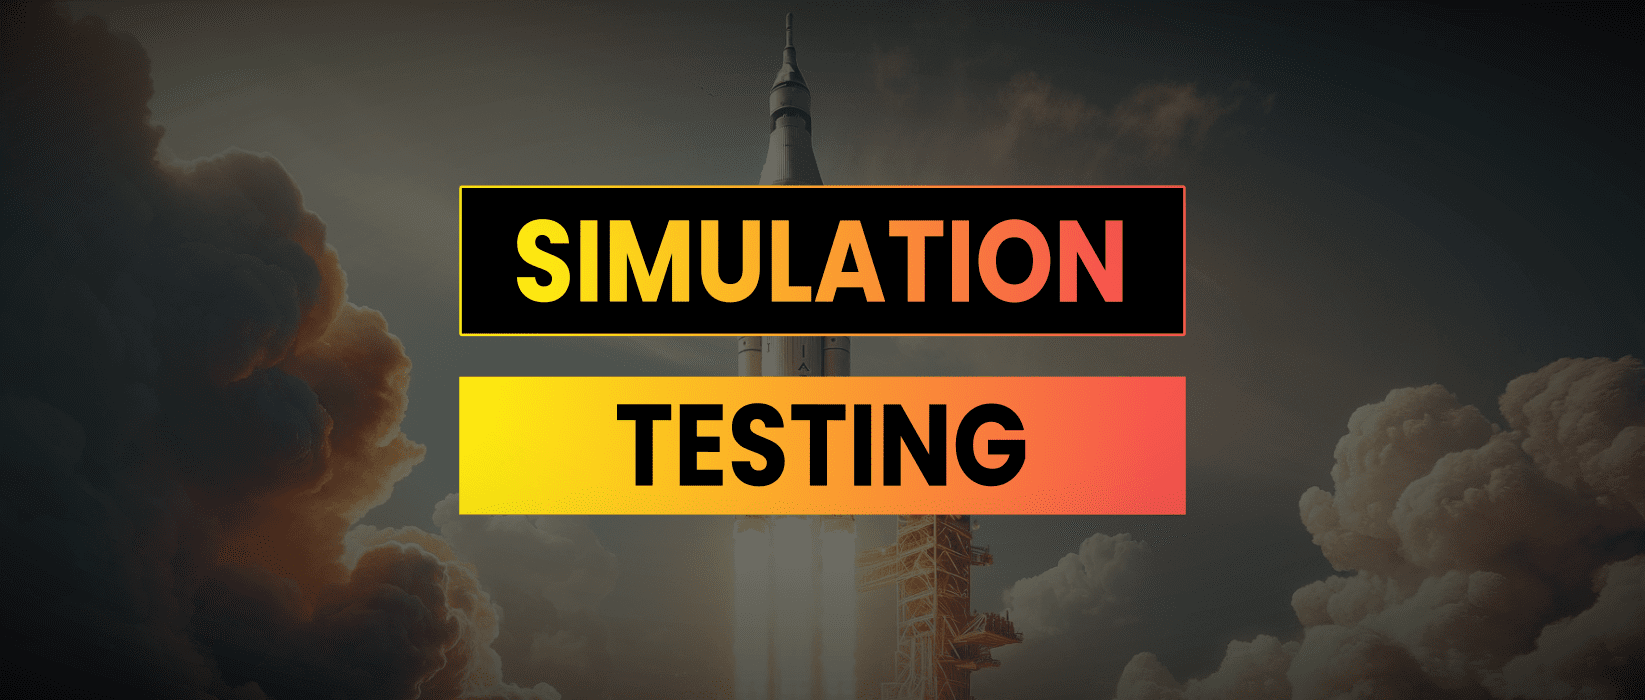 Simulation Testing